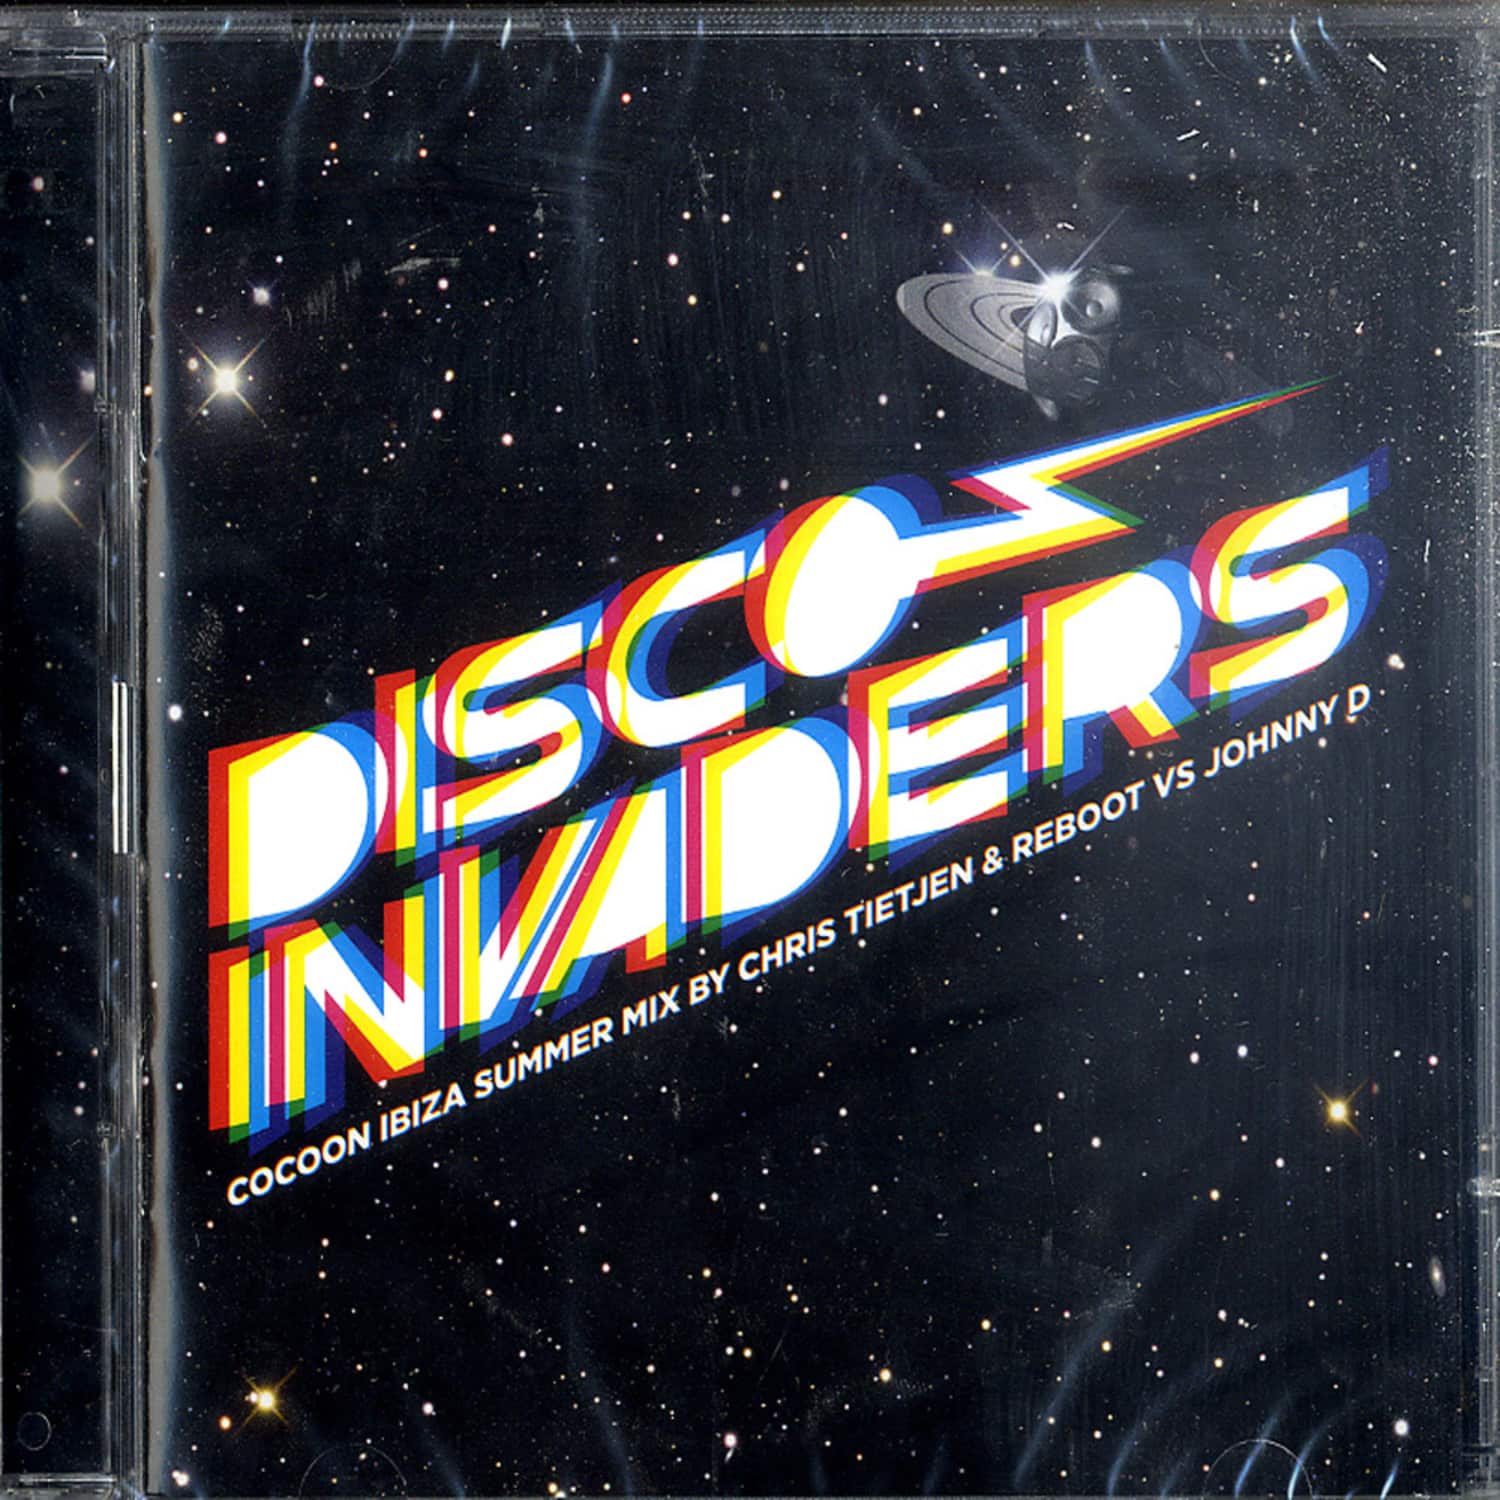 V/A mixed by Chris Tietjen & Reboot vs Johnny D - DISCO INVADERS - COCOON SUMMER MIX 